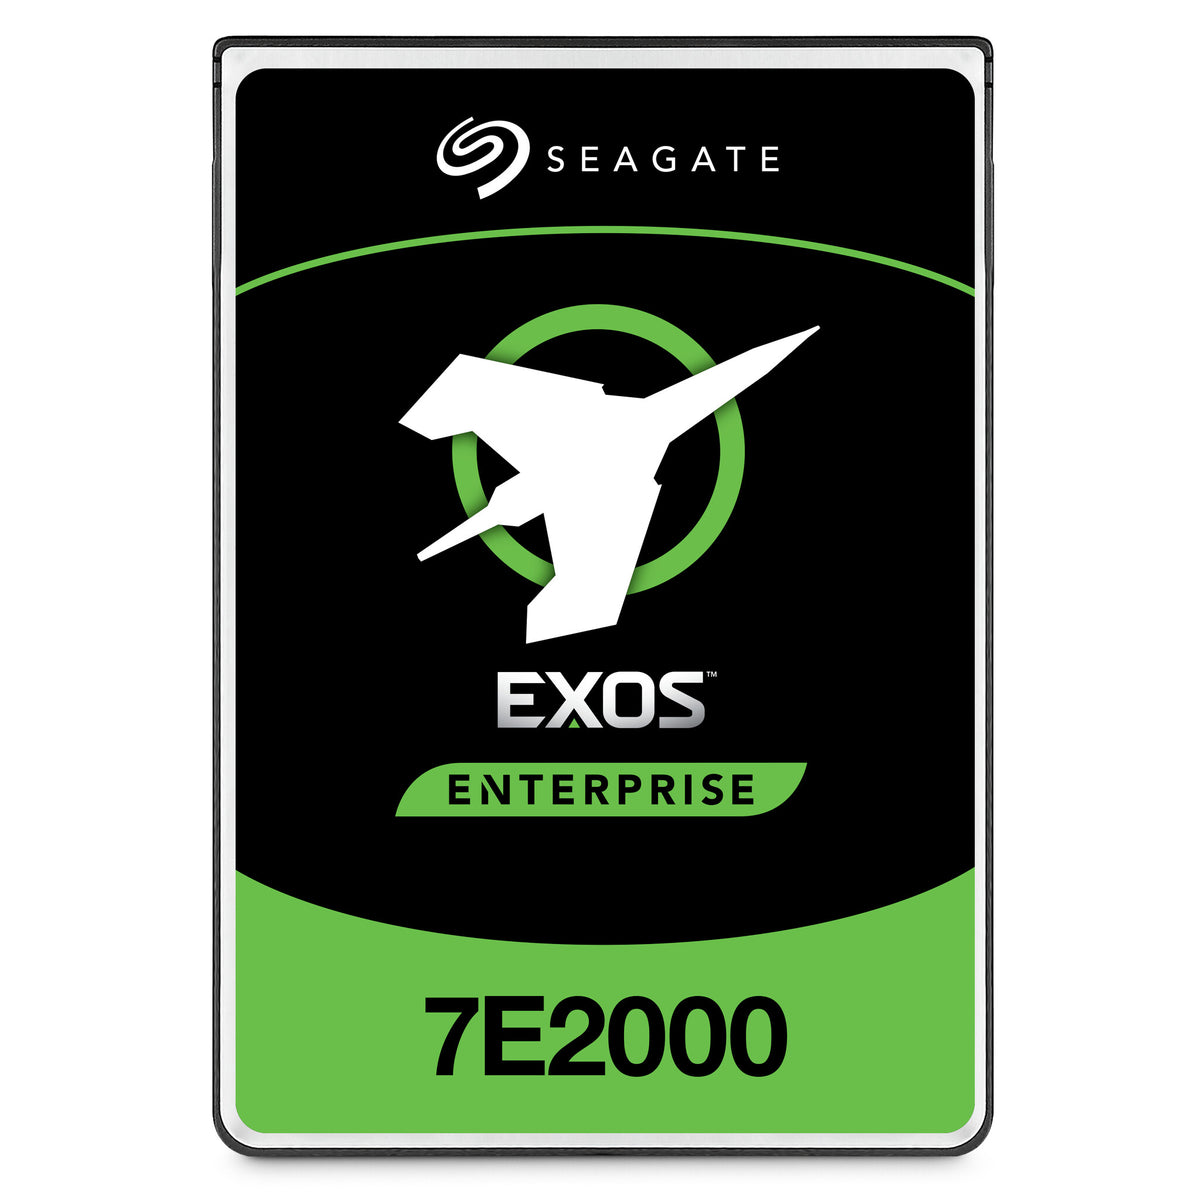 Seagate Enterprise Exos 7E2000 - 7.2K RPM SAS 2.5&quot; HDD - 2 TB